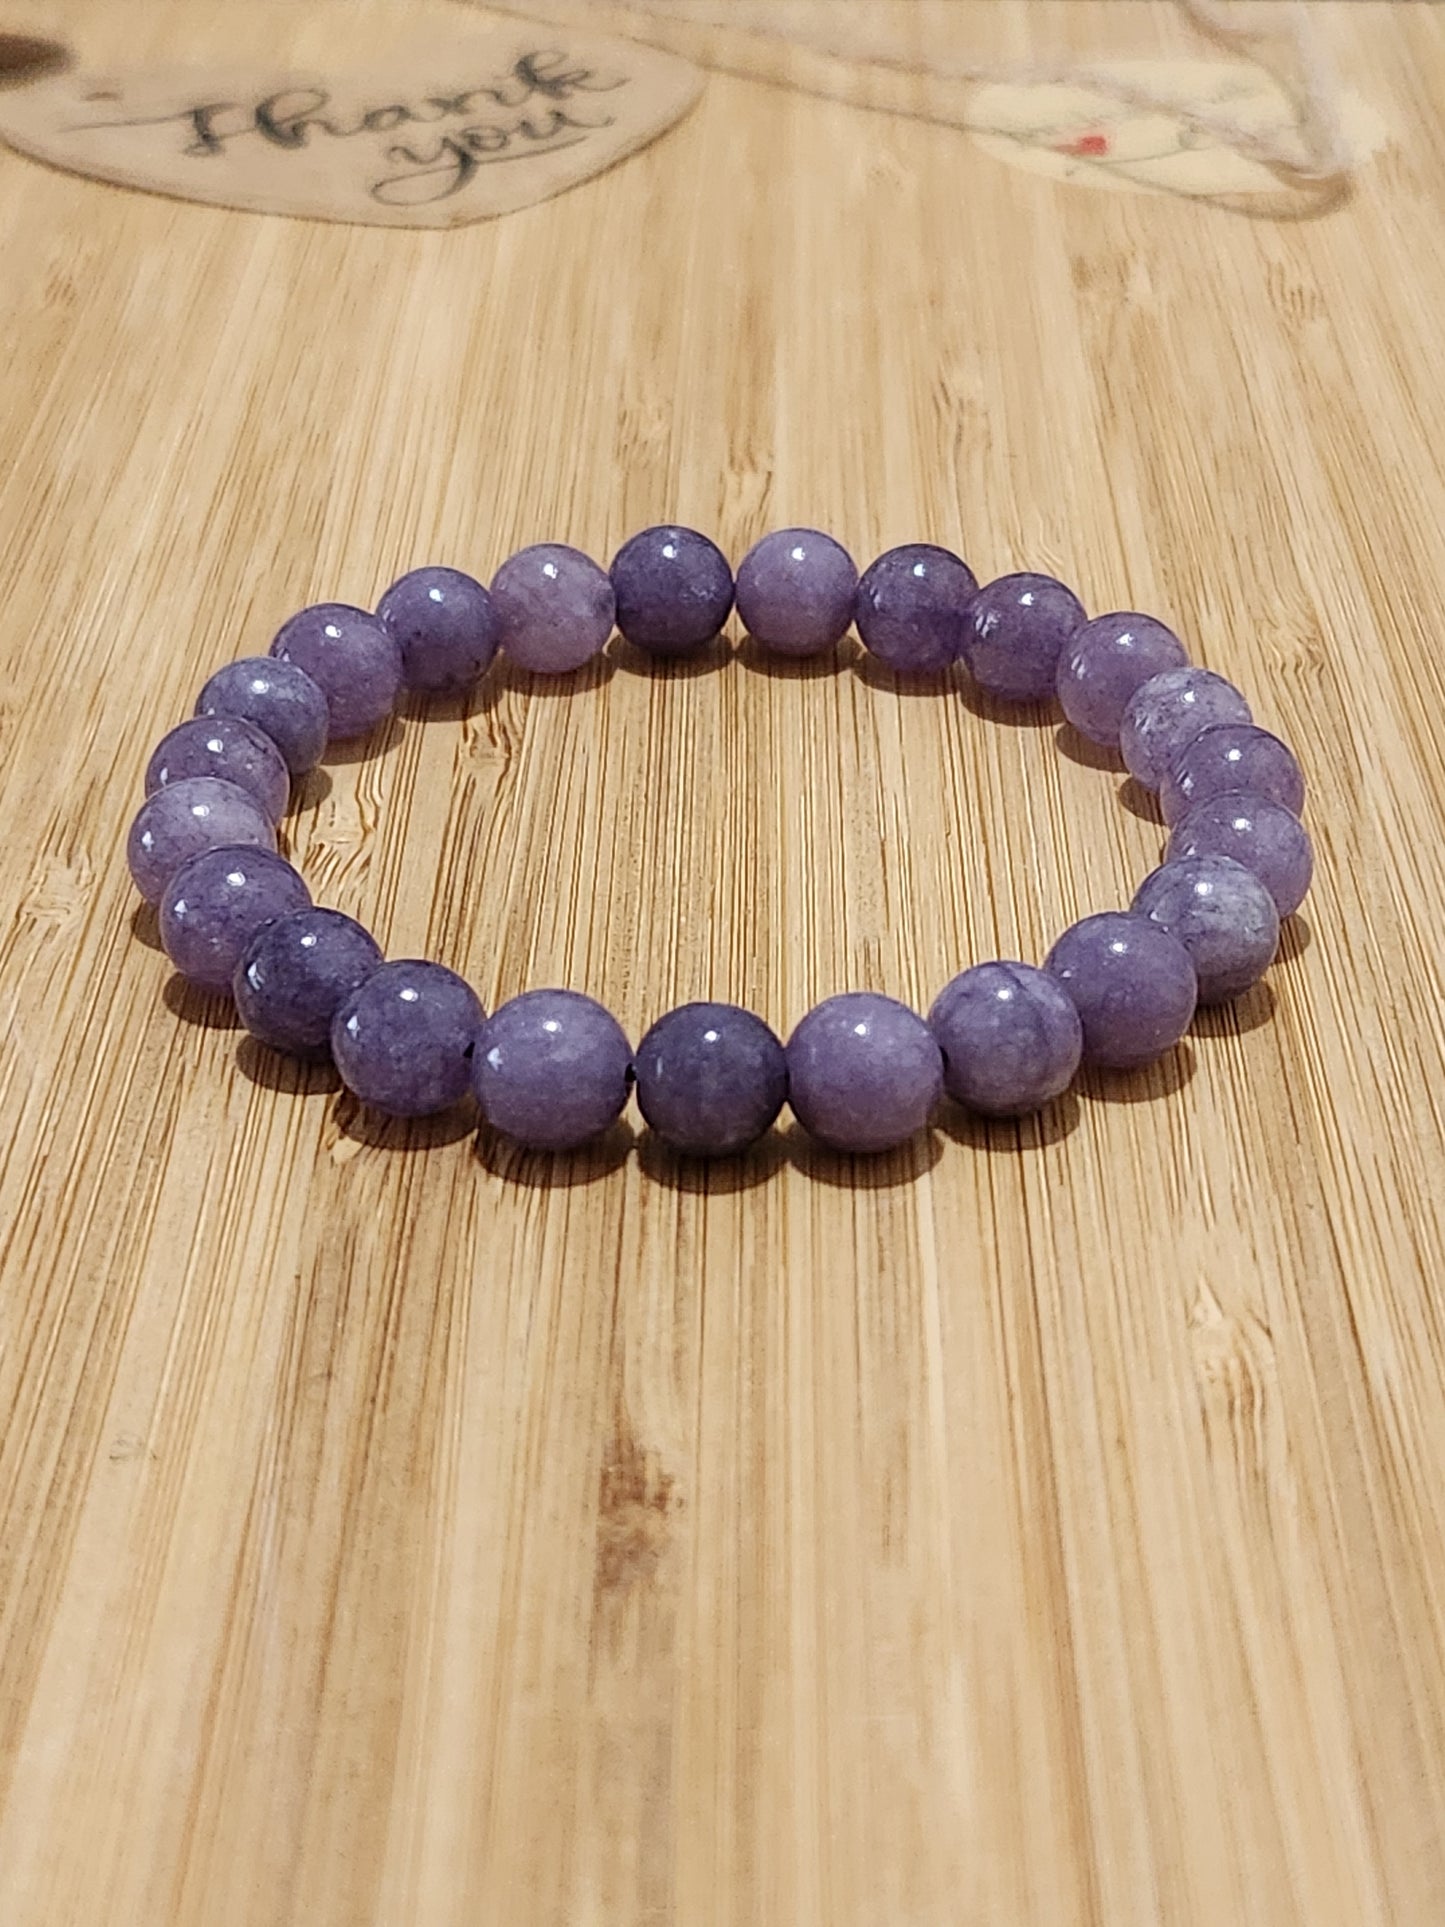 Lavender Stone Bracelet - love - appreciation - understanding - inspiration - joy